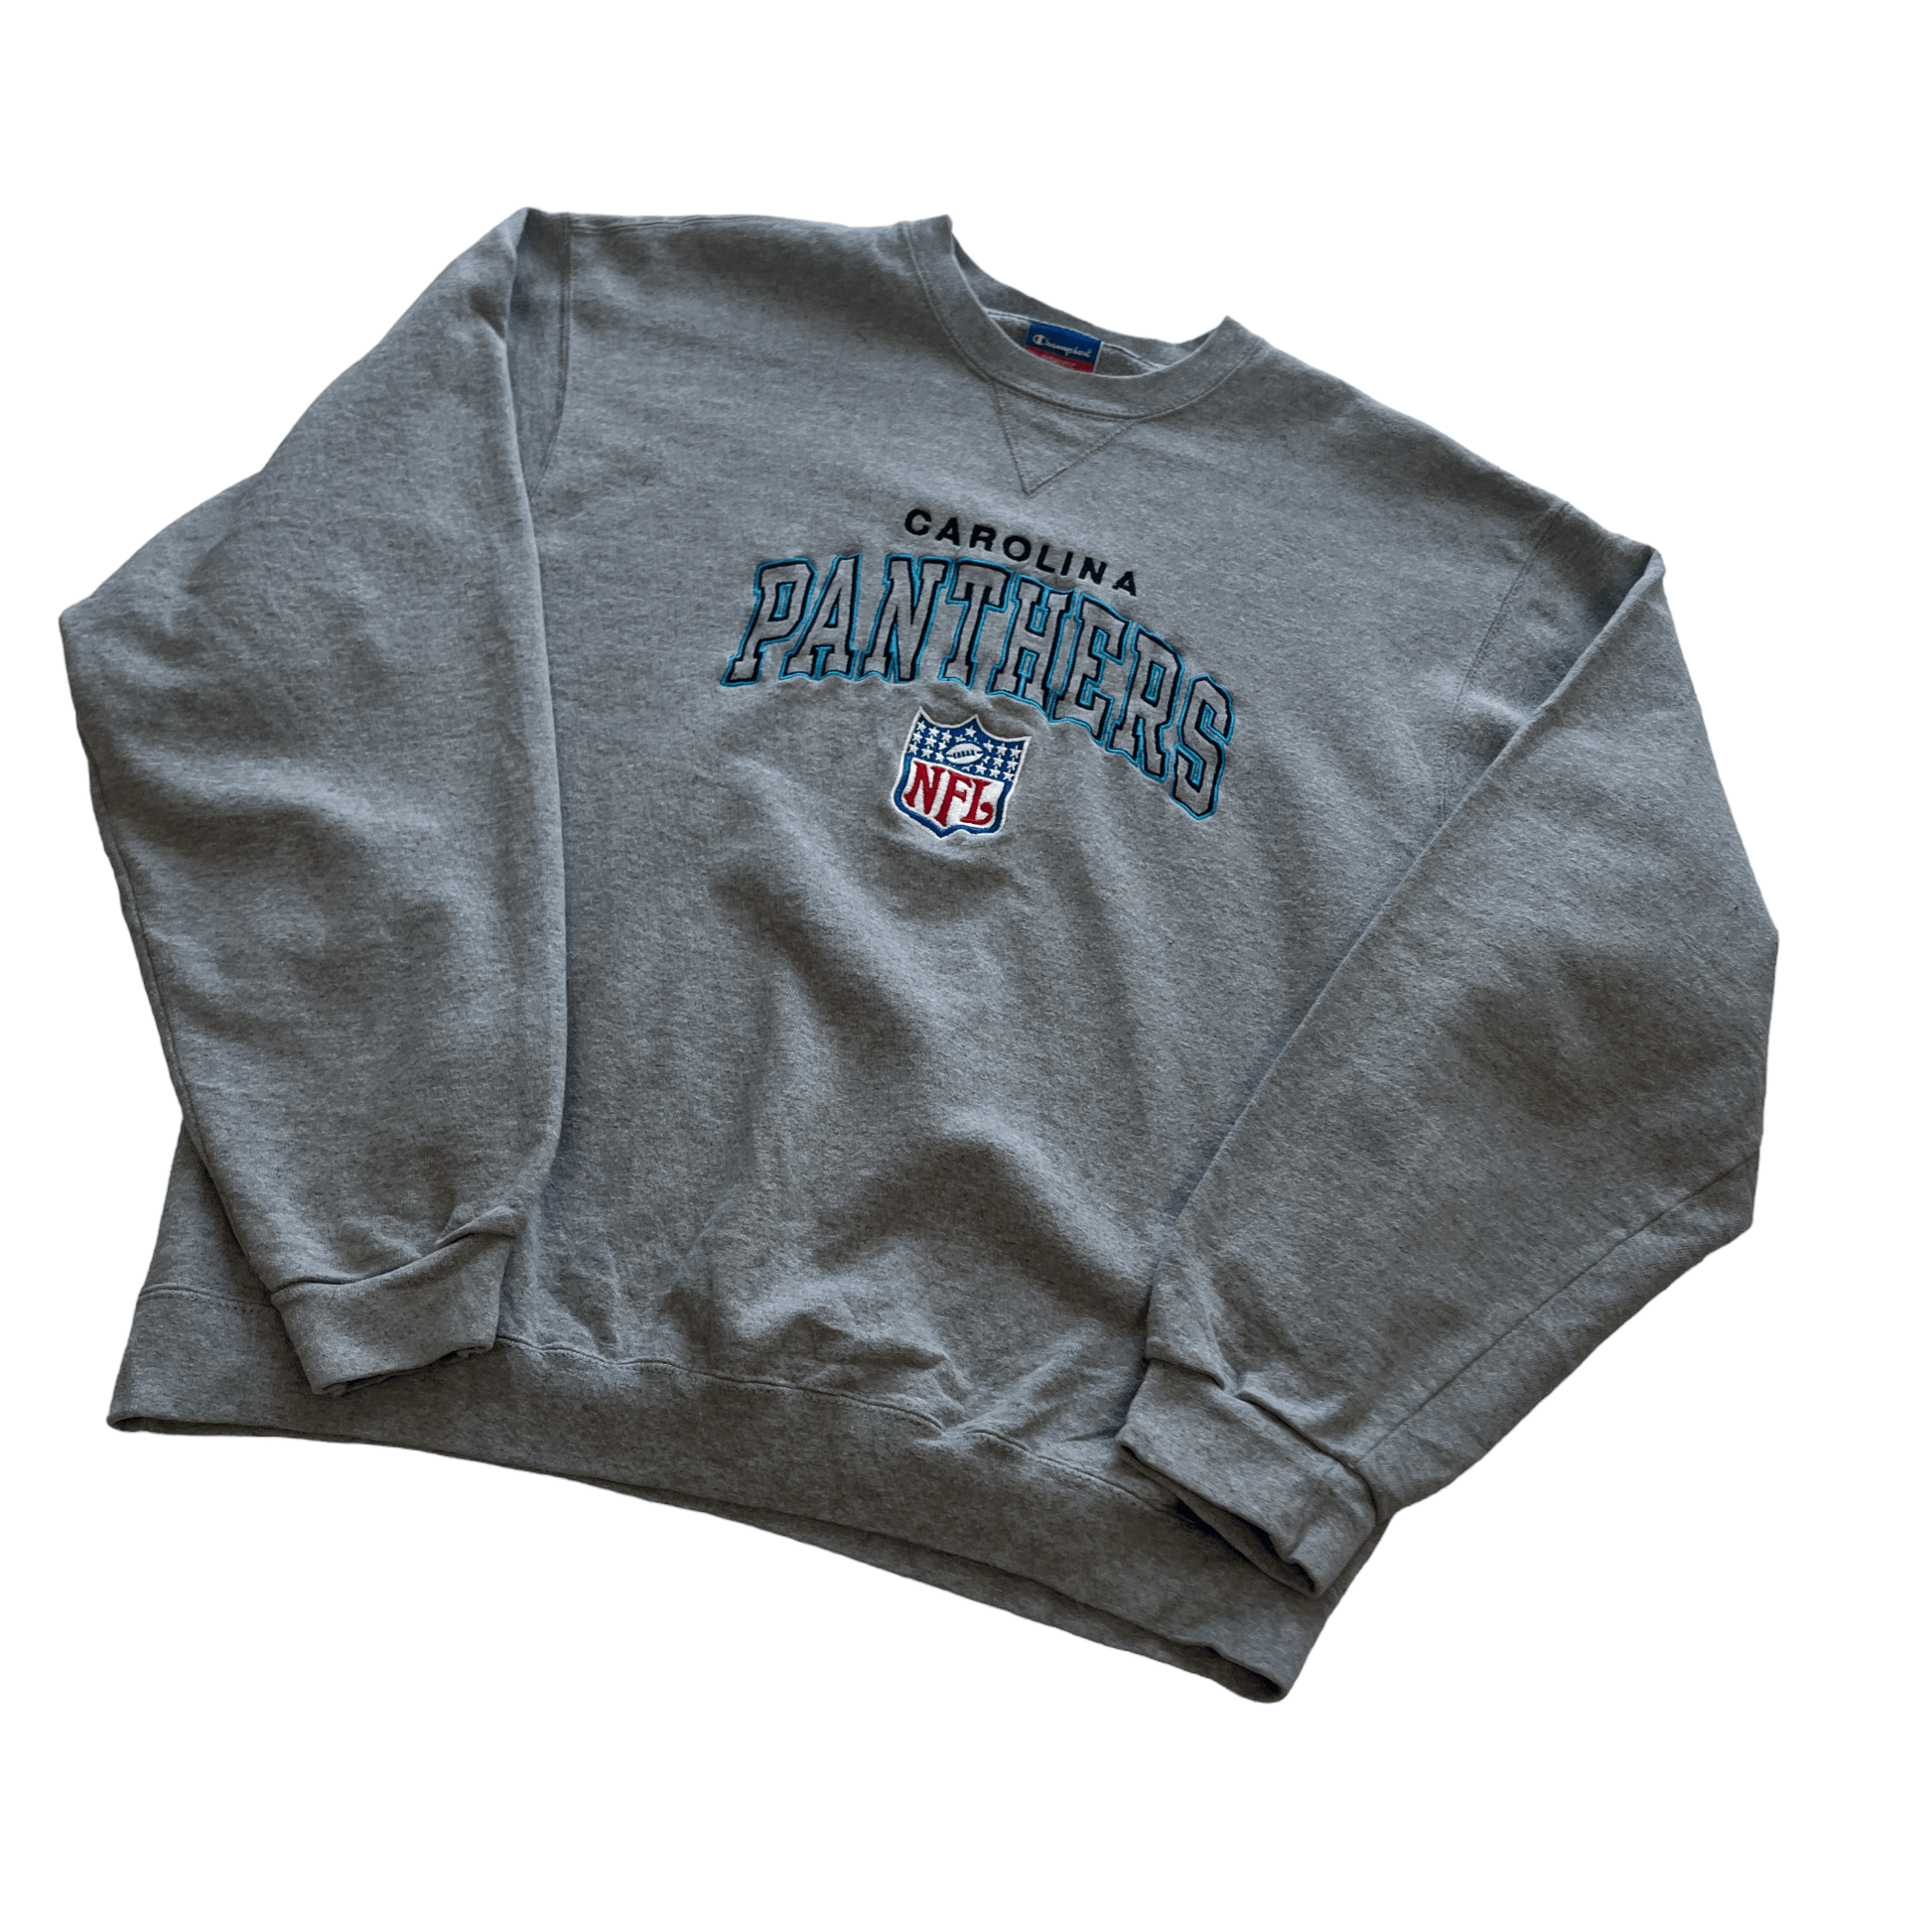 Vintage 90s Grey Champion NFL Panthers Sweatshirt - Large - The Streetwear Studio